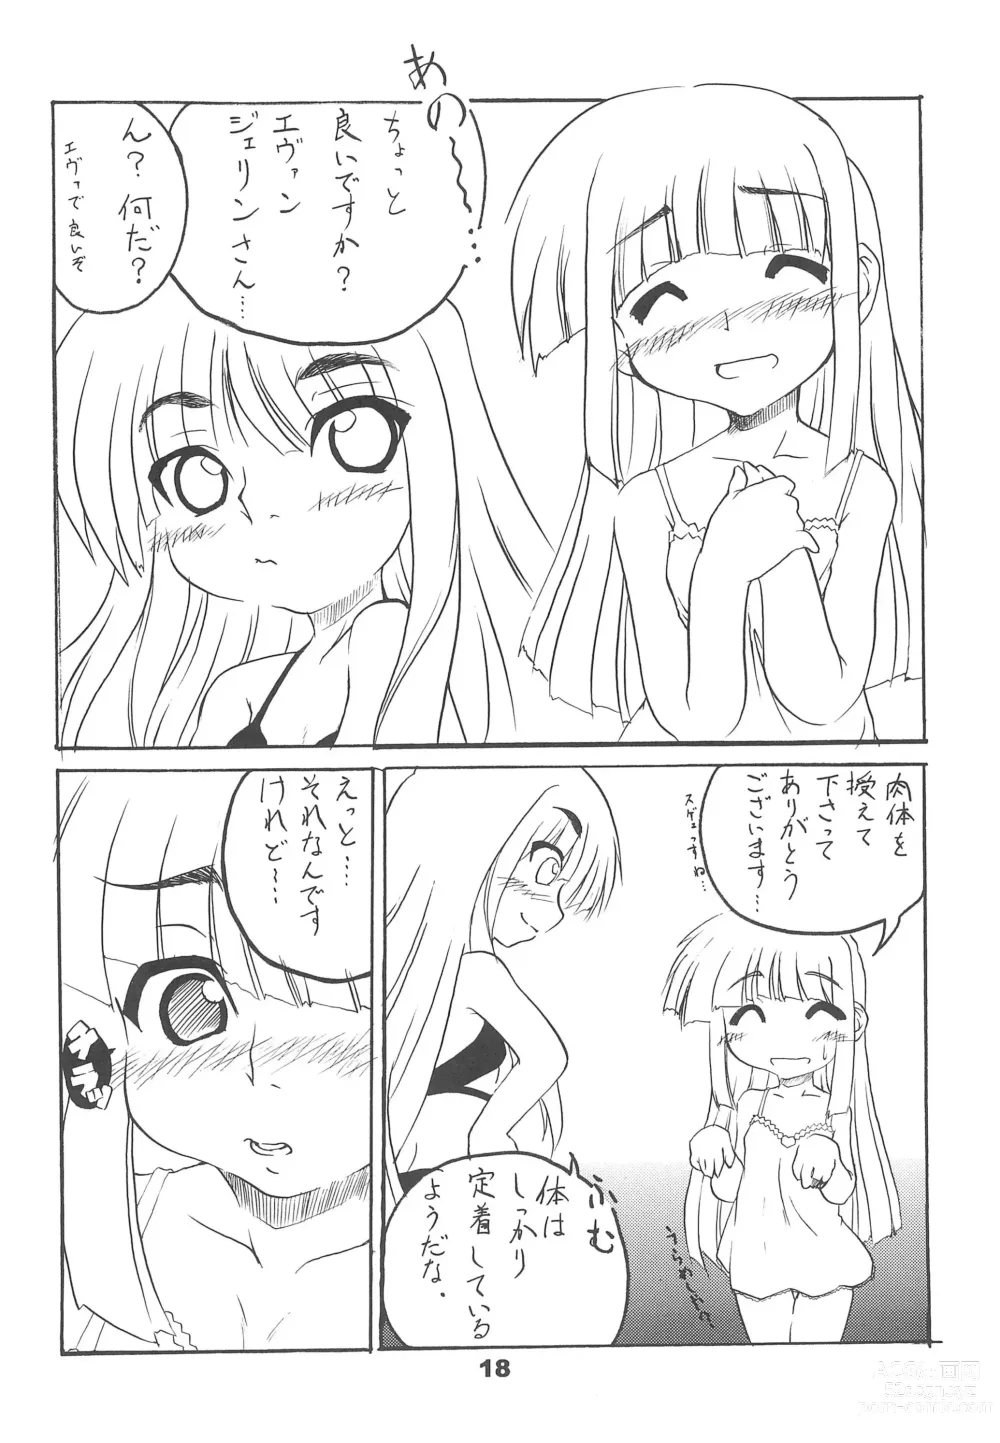 Page 18 of doujinshi Evangeline the virgin